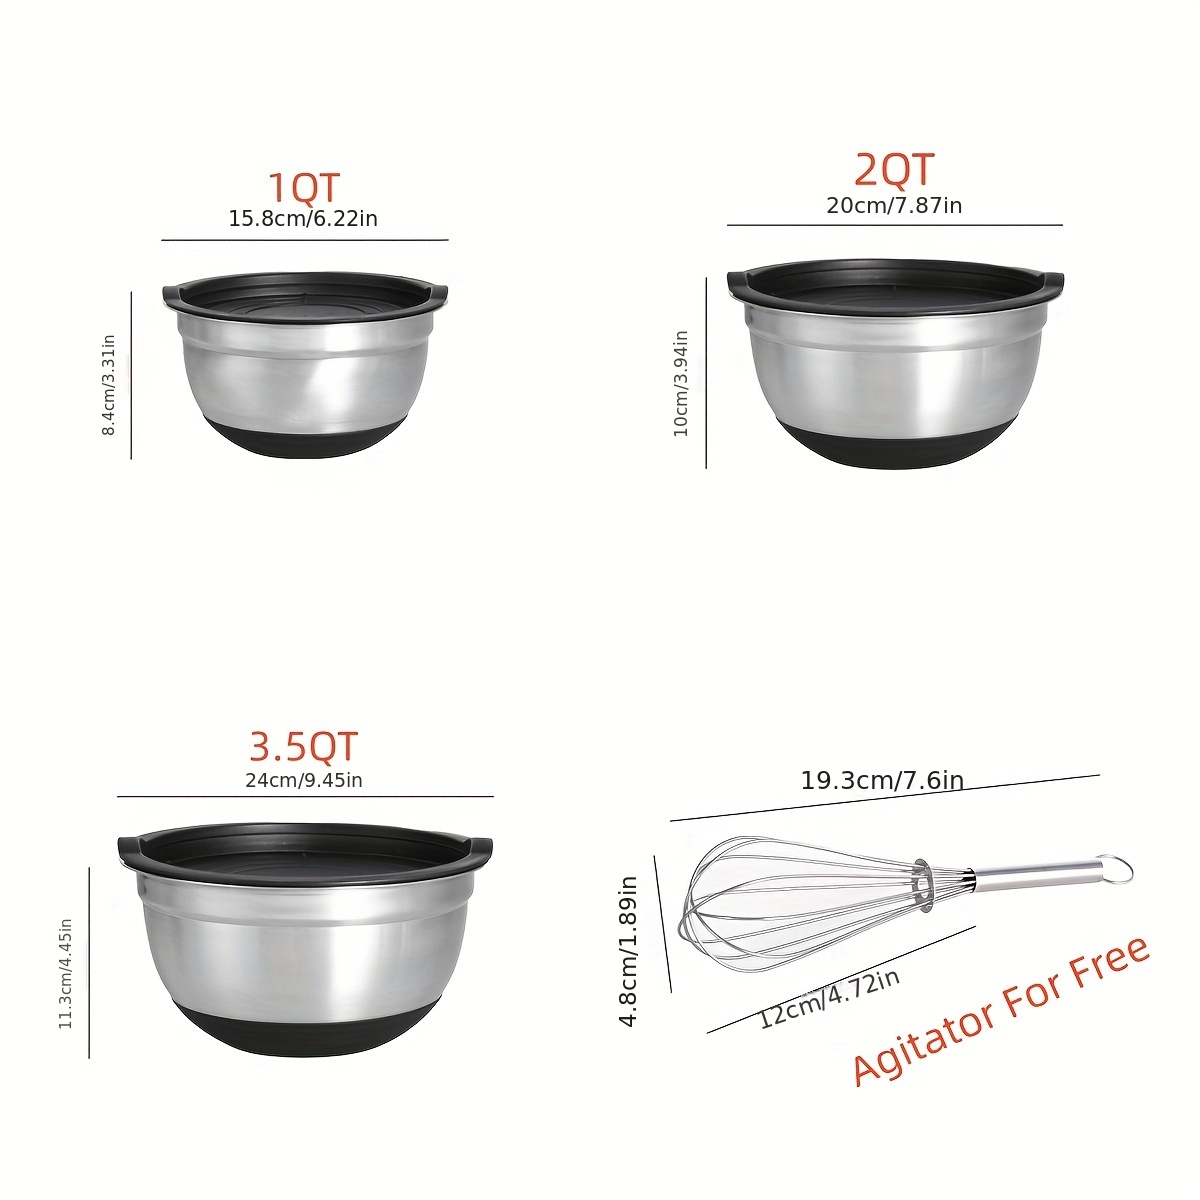 KitchenAid Gadgets KitchenAid Mixing Bowls Set 3